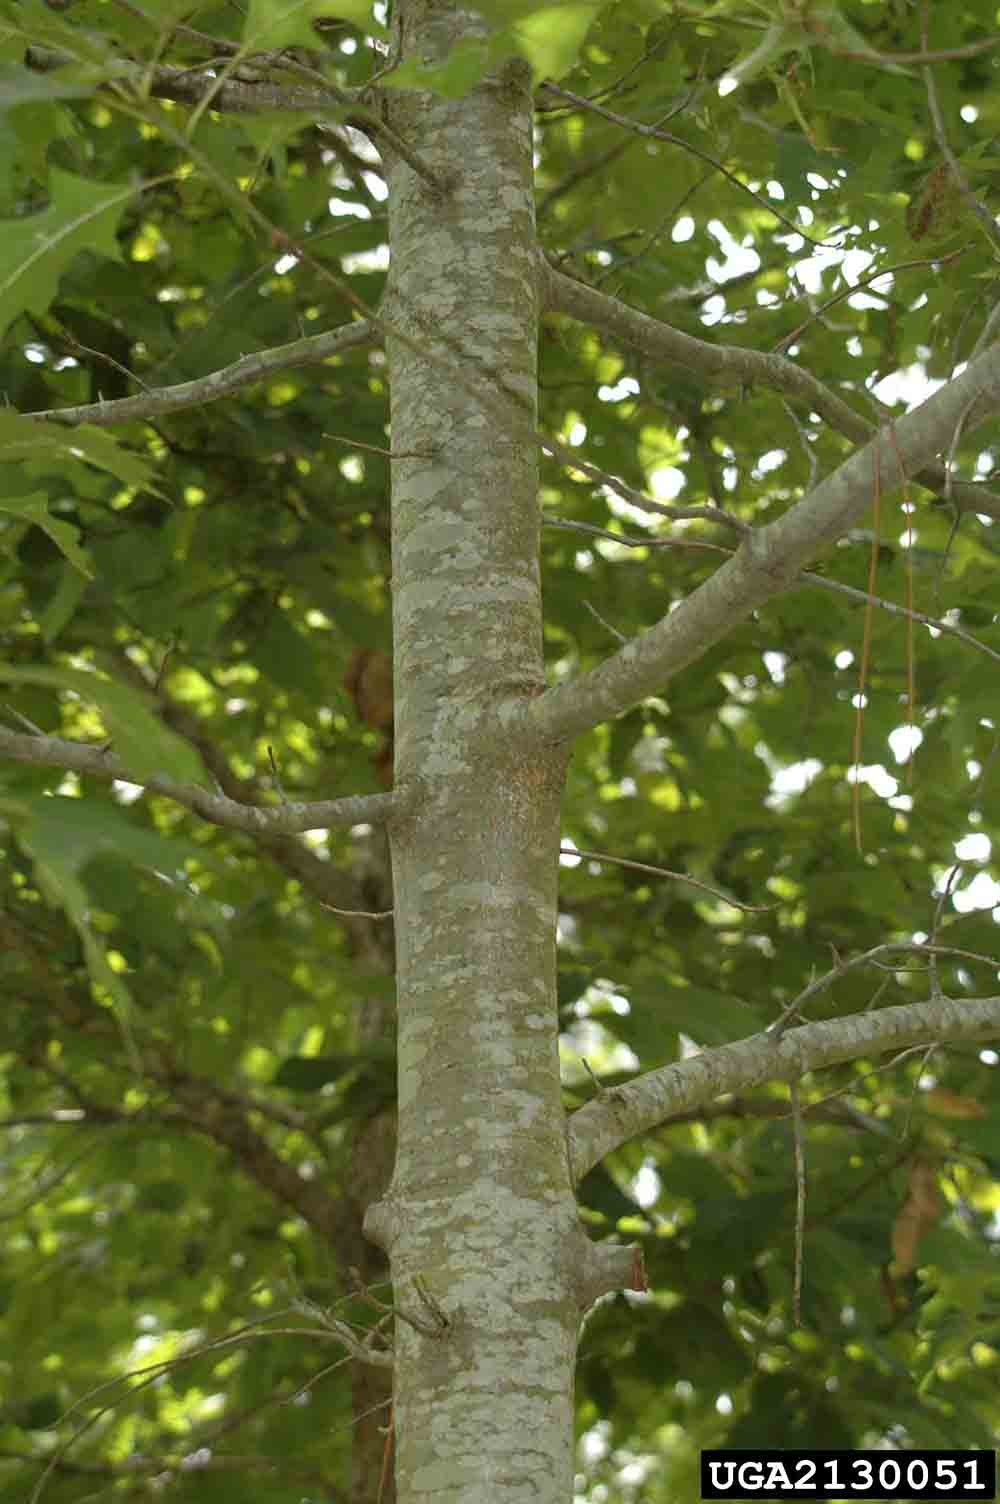 Pin oak bark on young tree